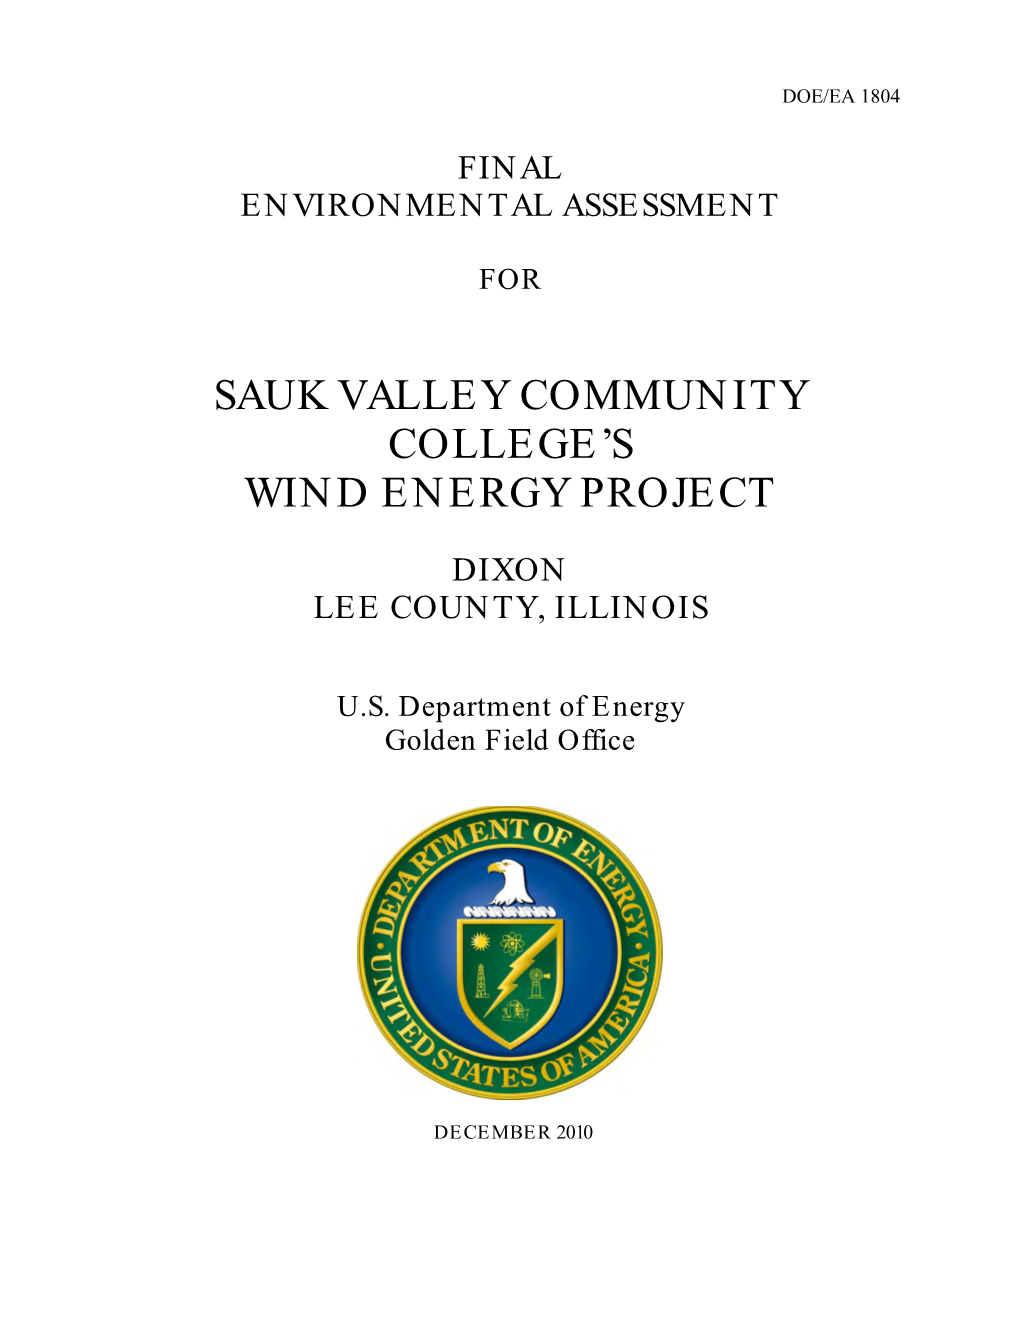 Sauk Valley Community College's Wind Energy